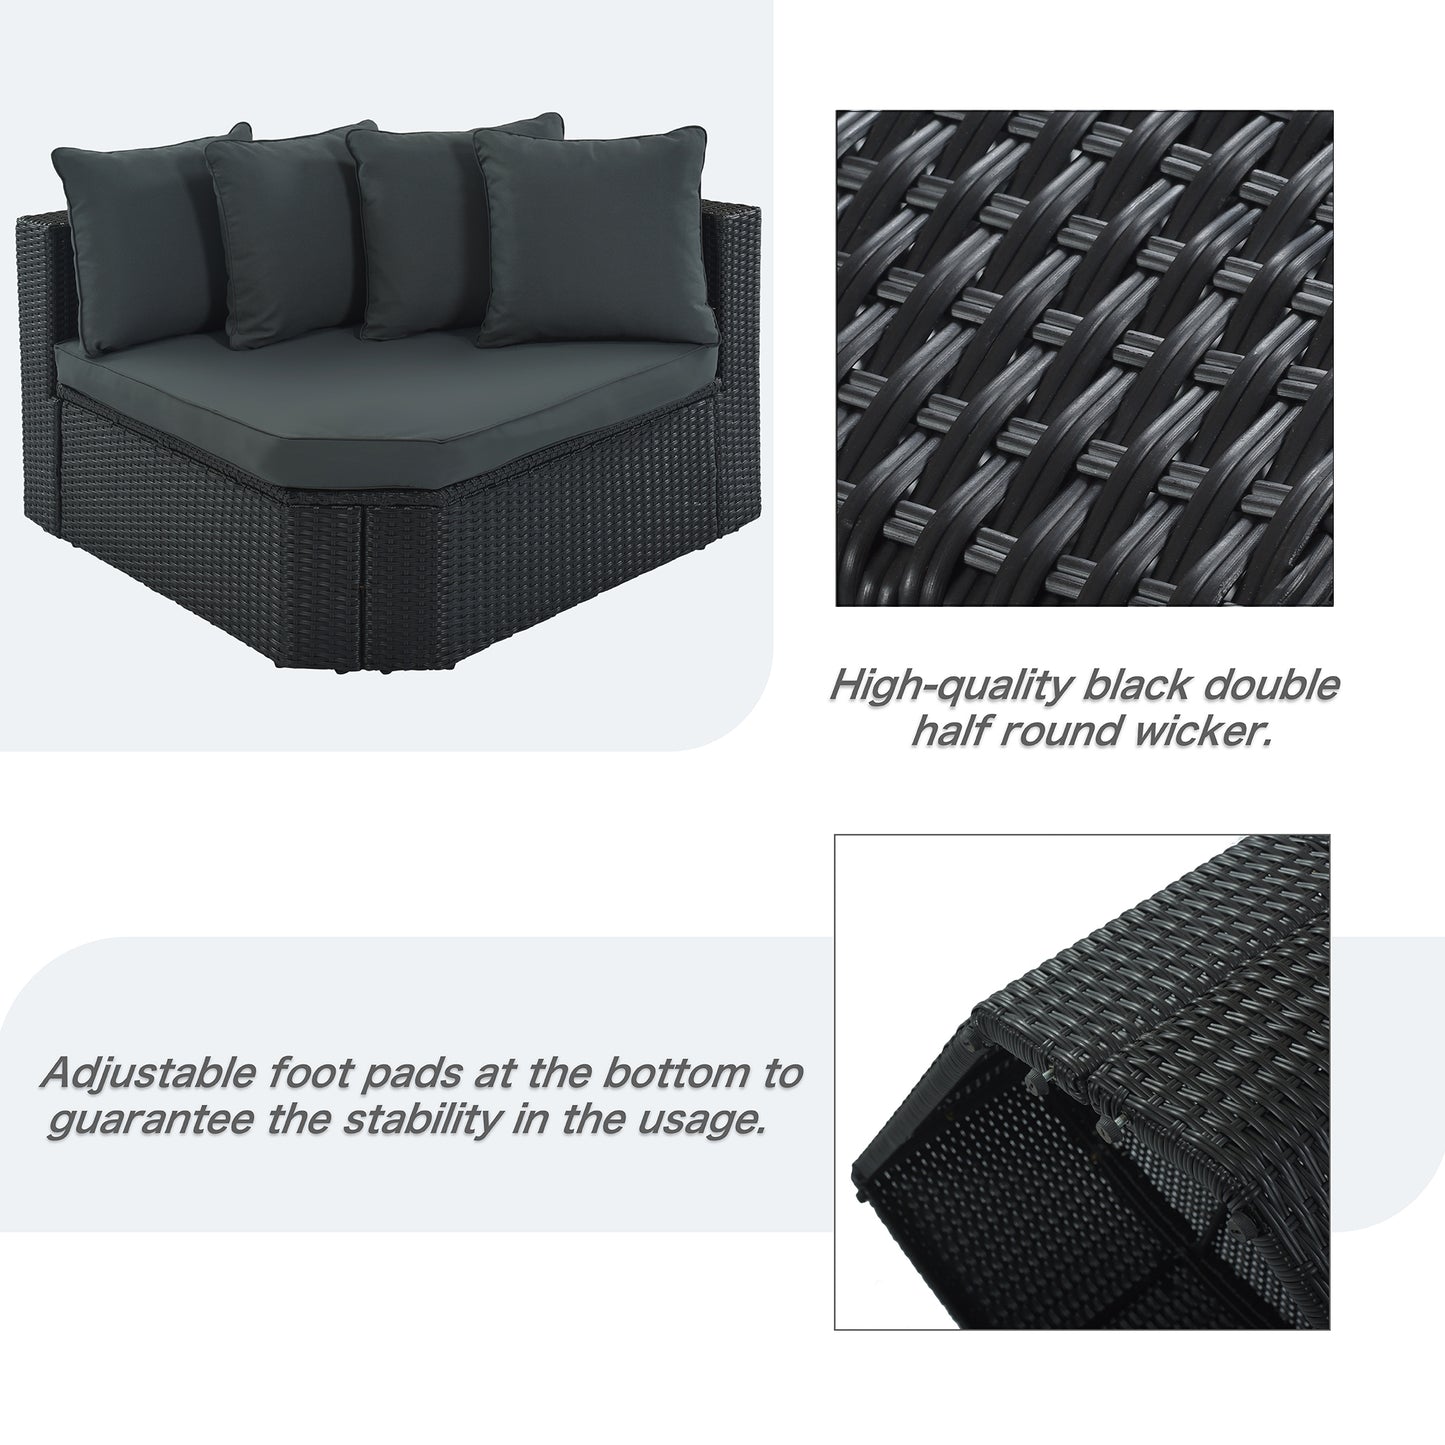 7-piece Outdoor Wicker Sofa Set, Rattan Sofa Lounger, With Striped Green Pillows, Conversation Sofa, For Patio, Garden, Deck, Black Wicker, Gray Cushion